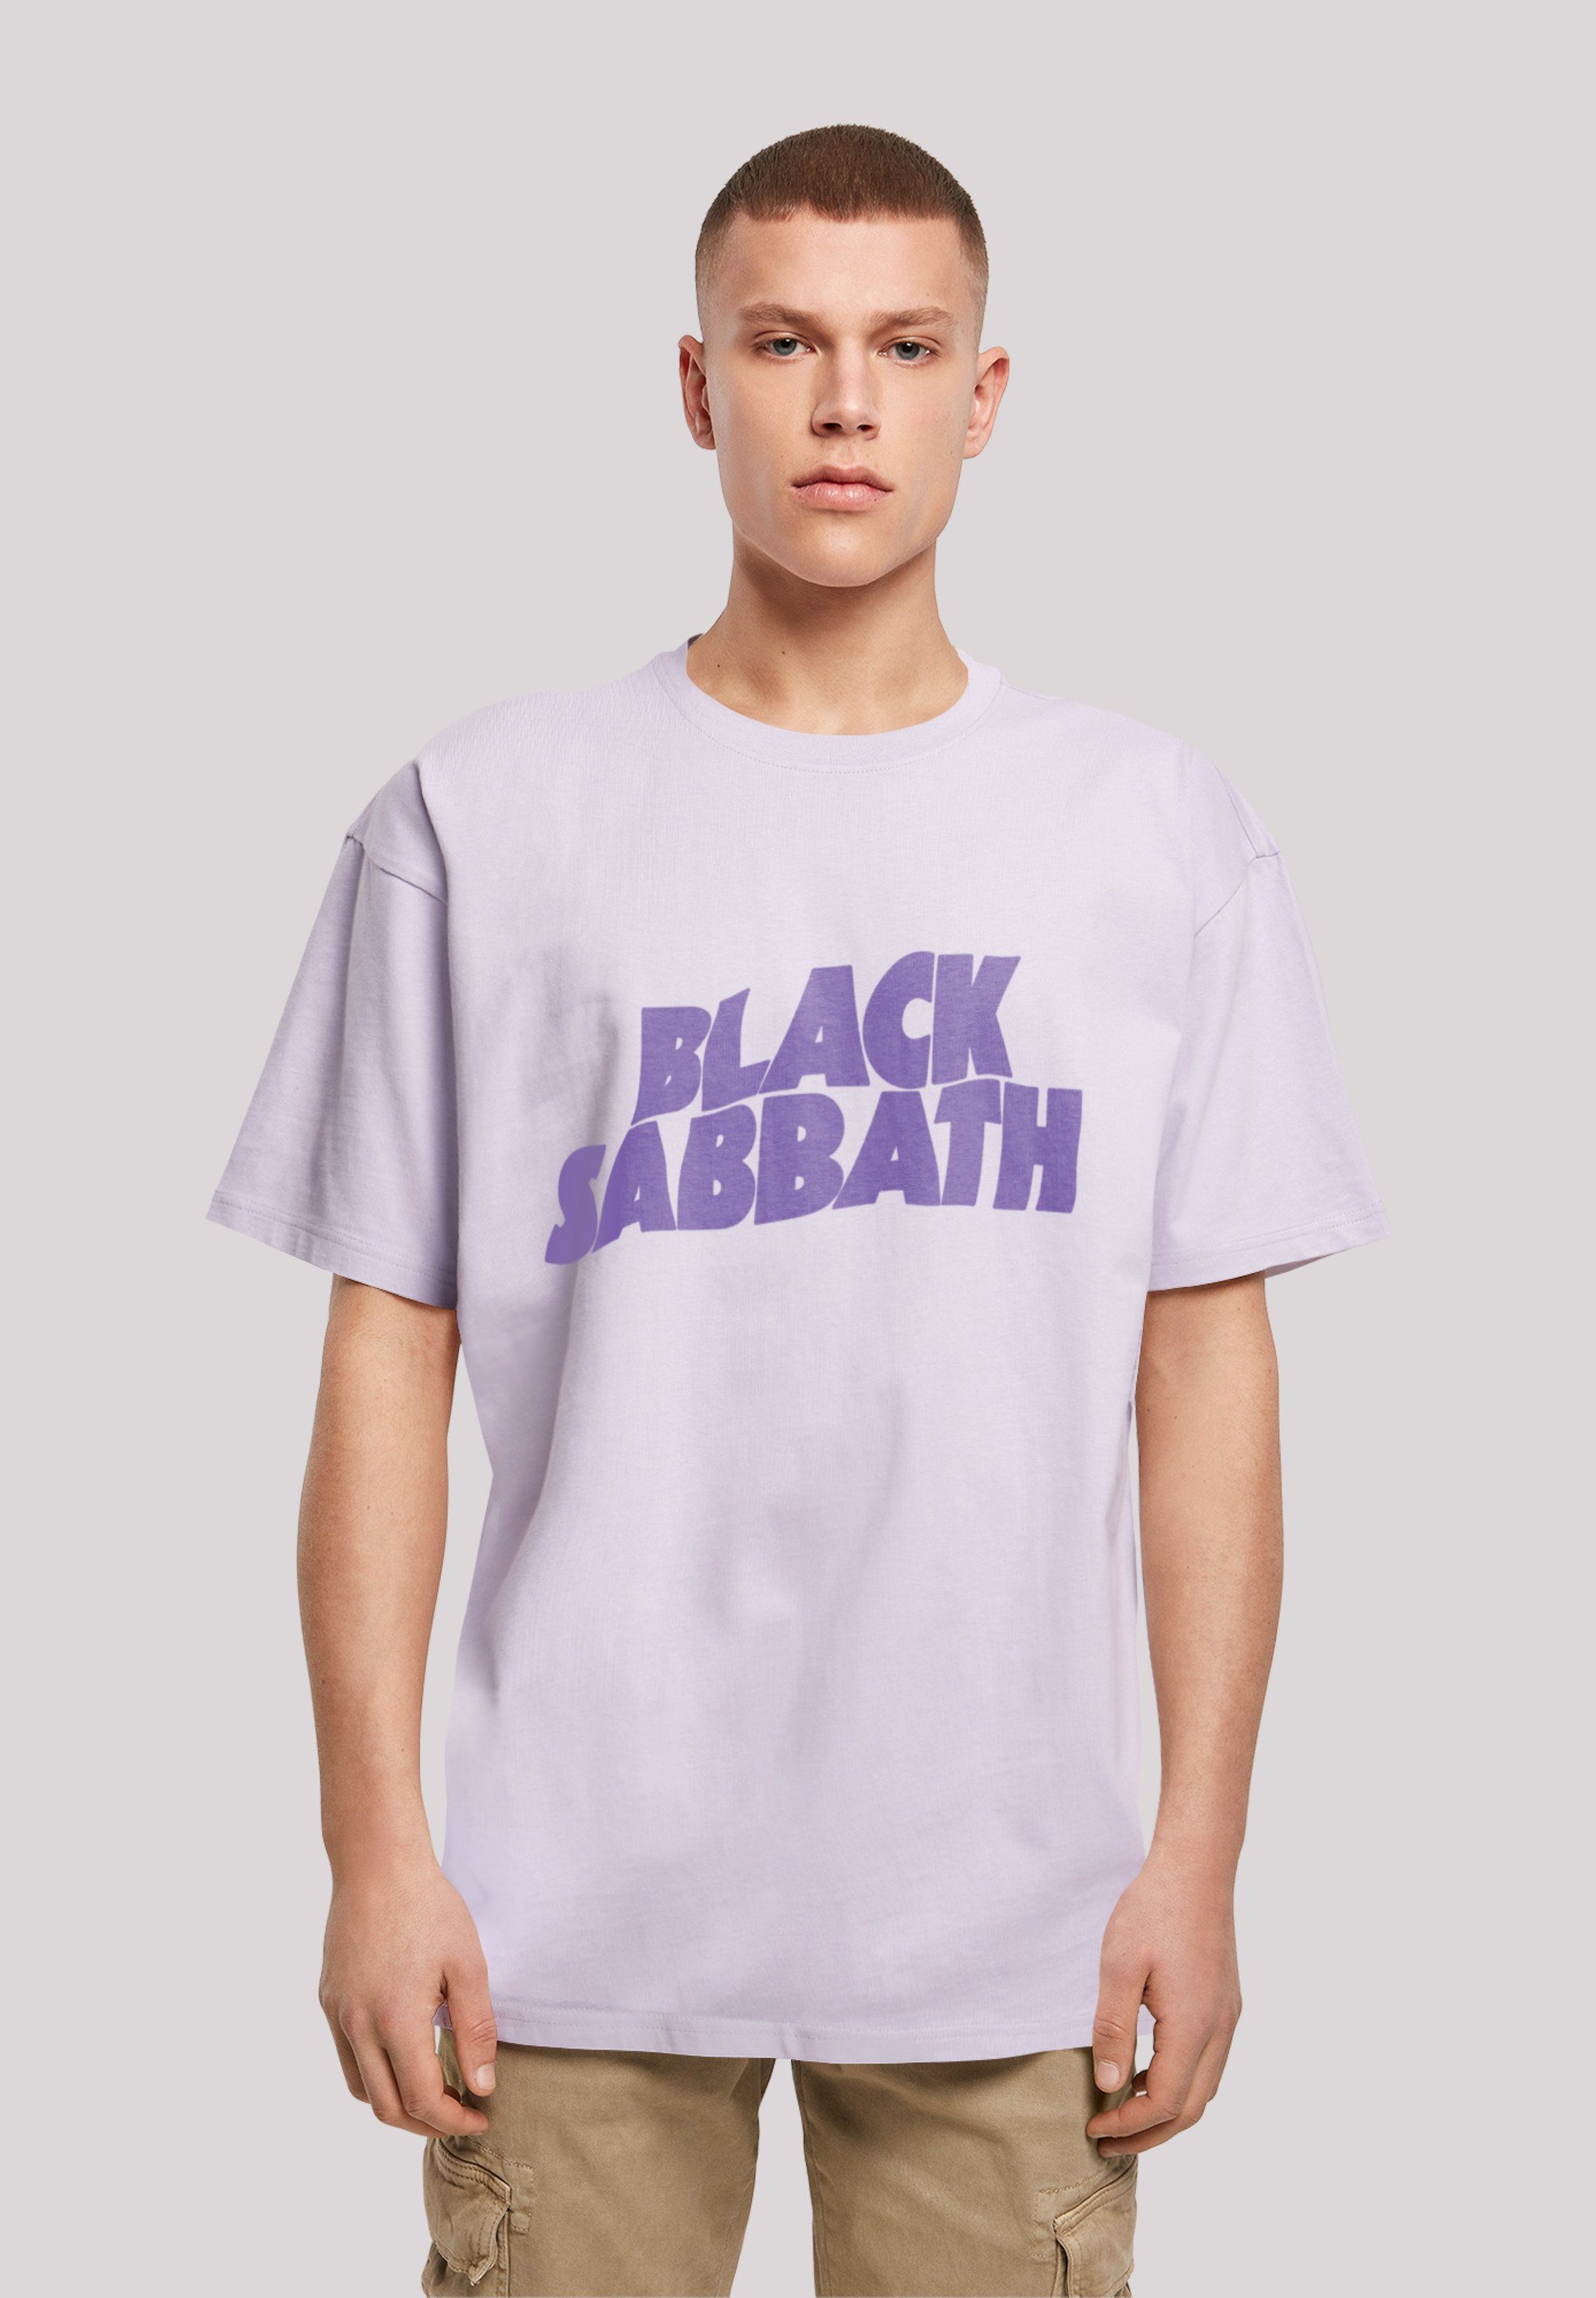 F4NT4STIC T-Shirt Black Sabbath Heavy Band lilac Black Logo Metal Wavy Print